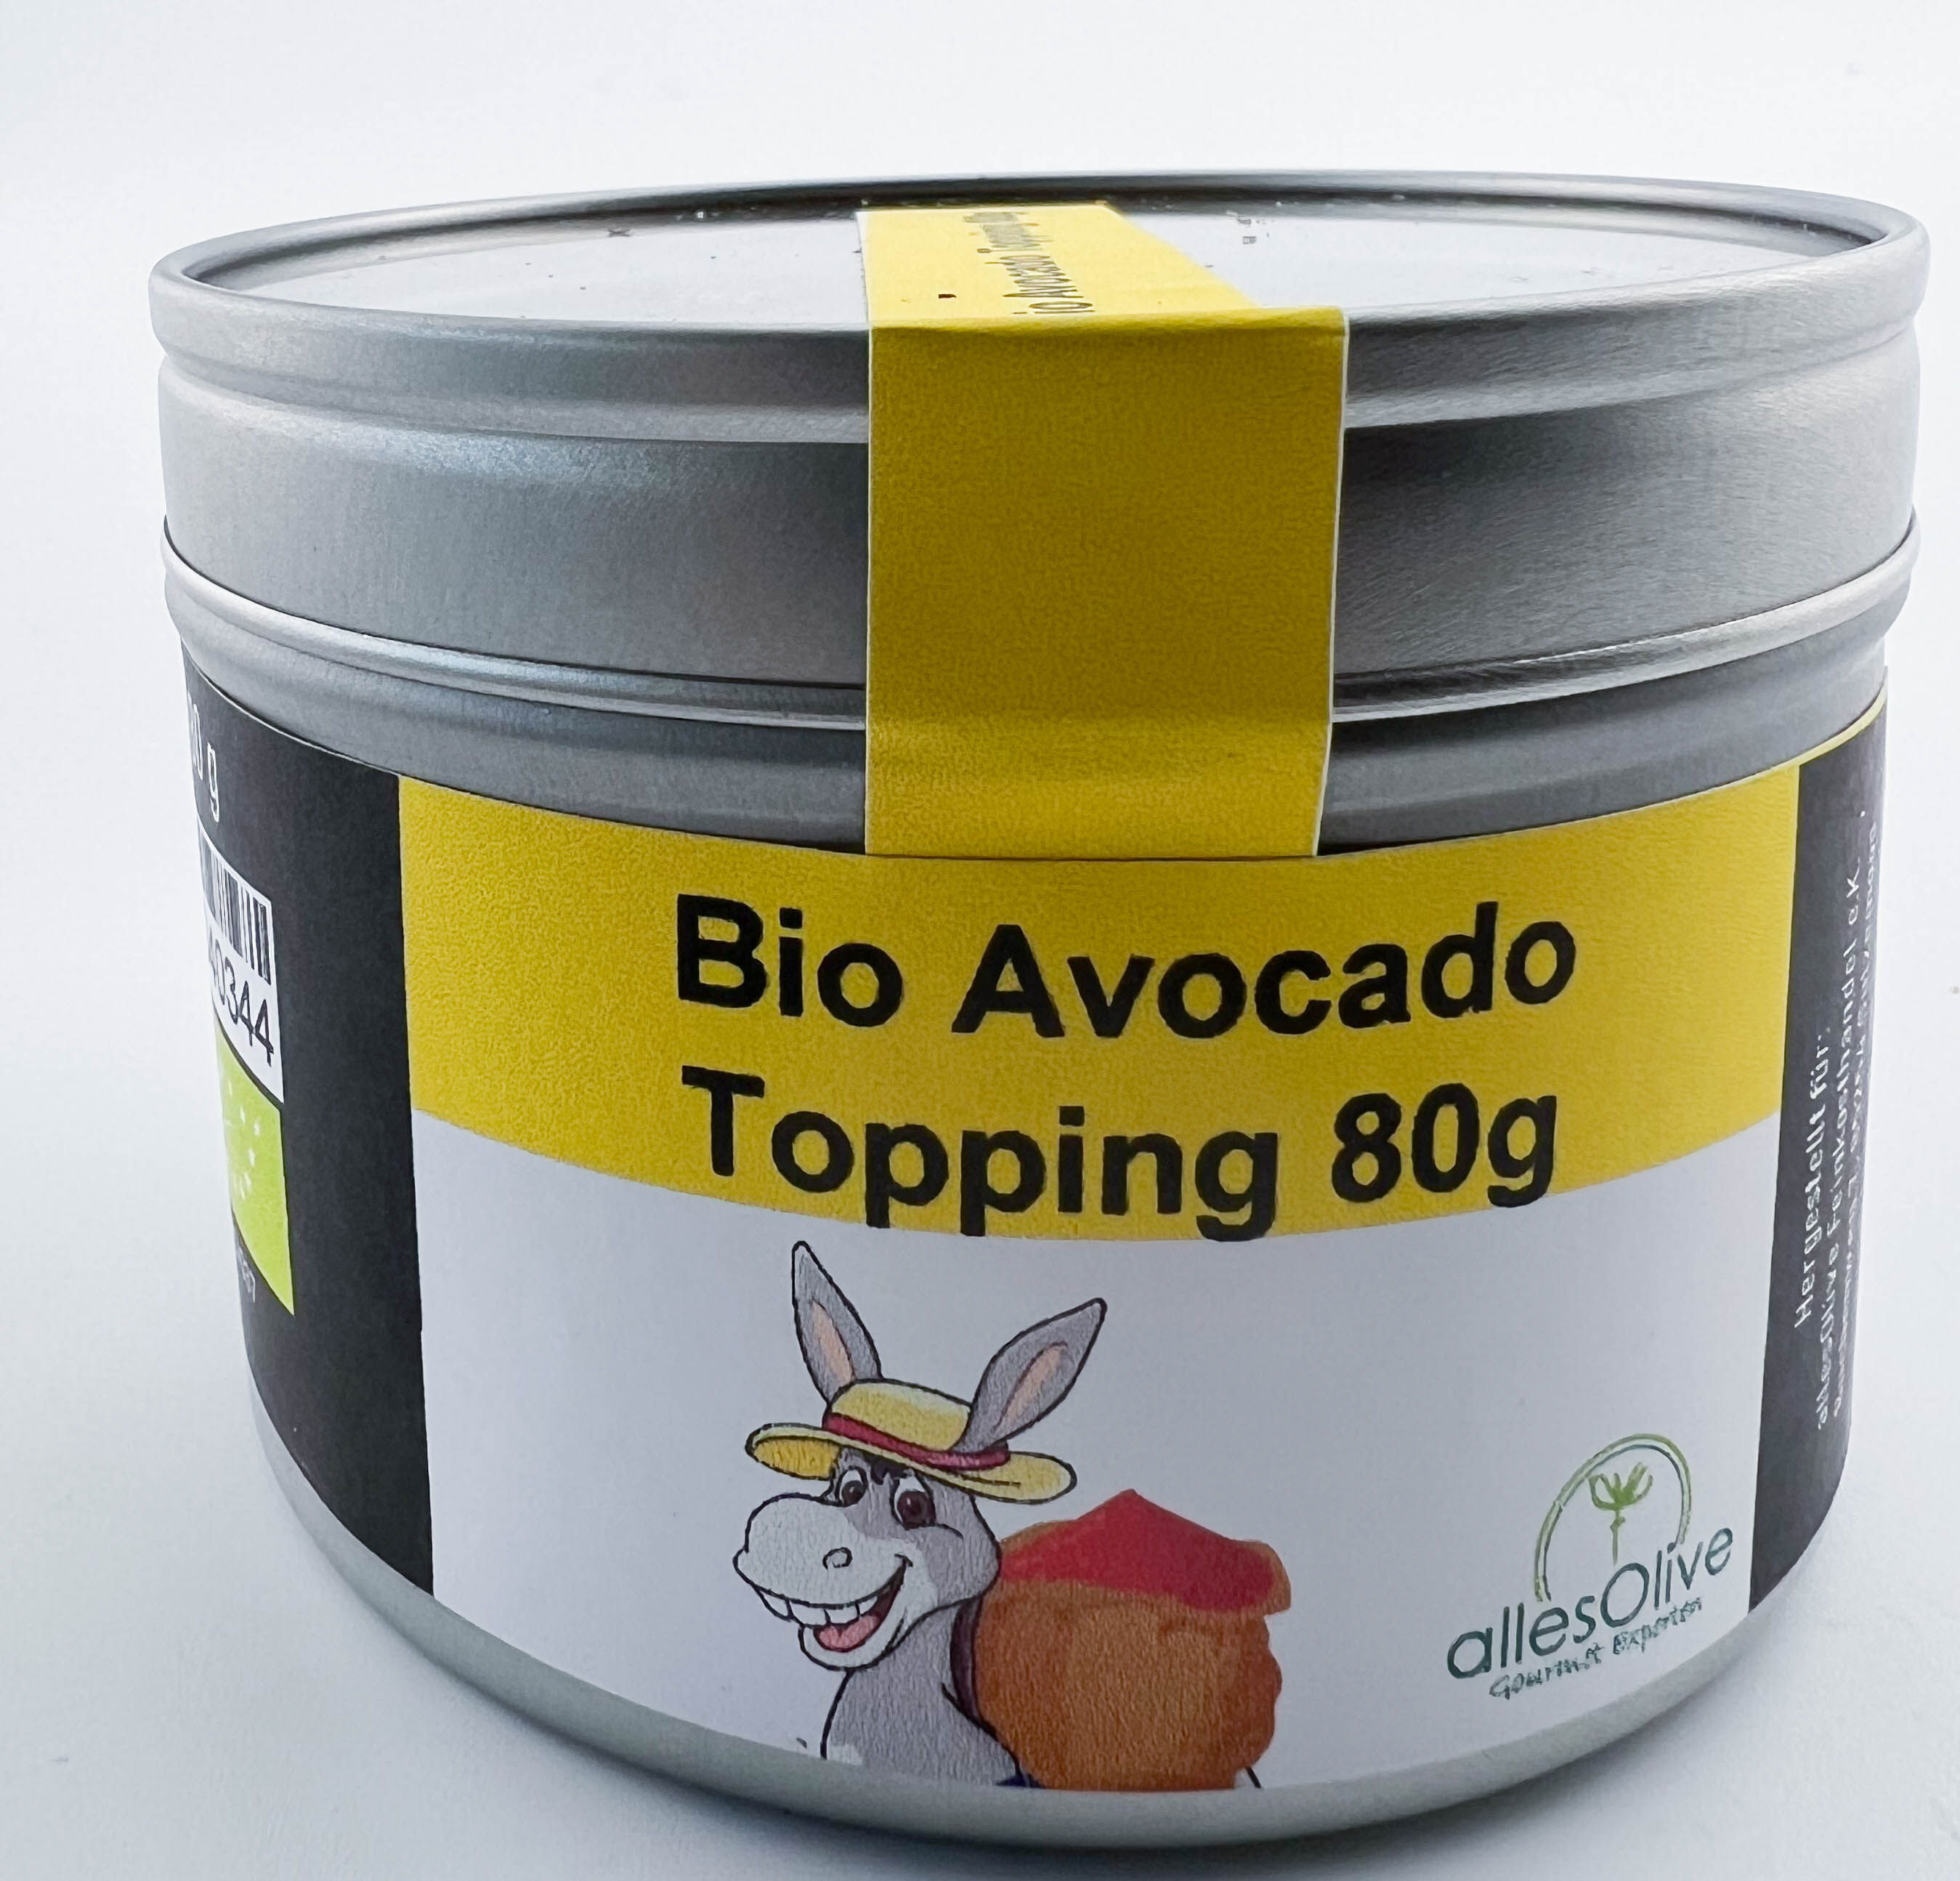 Bio Avocado Topping 80g